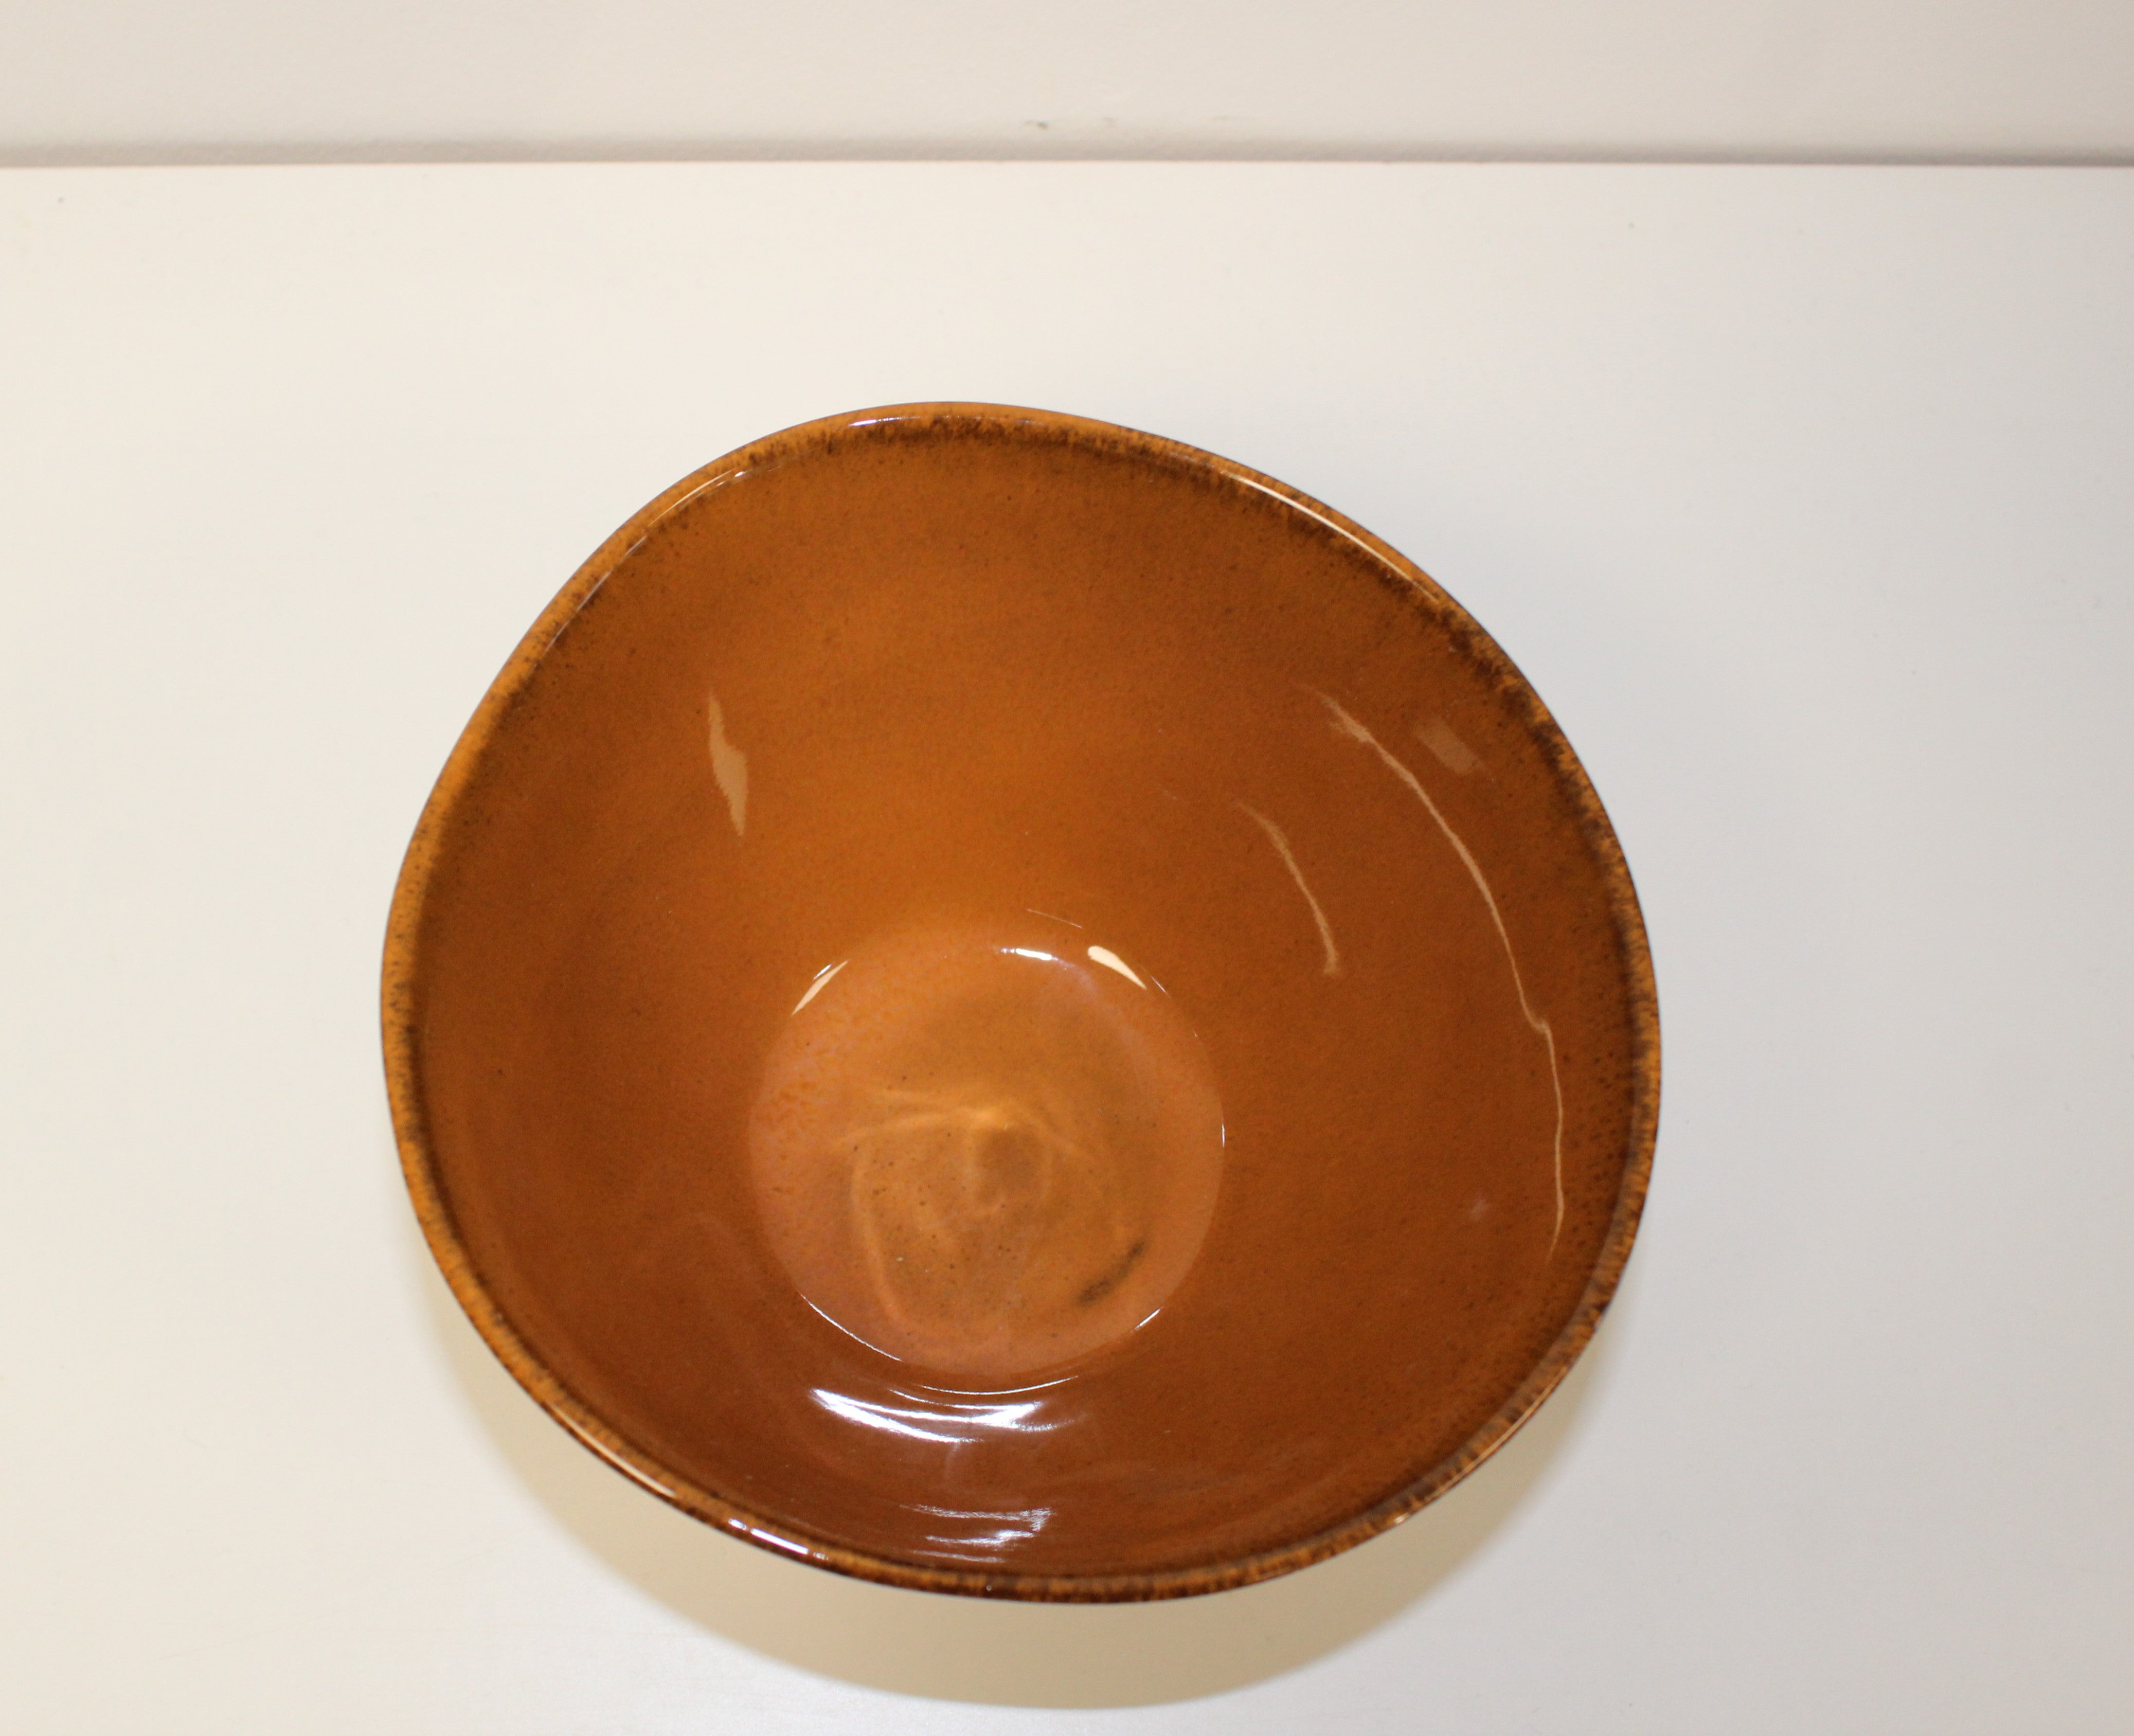 Calma Ceramics | Schale braun | Durchmesser ca. 15 cm